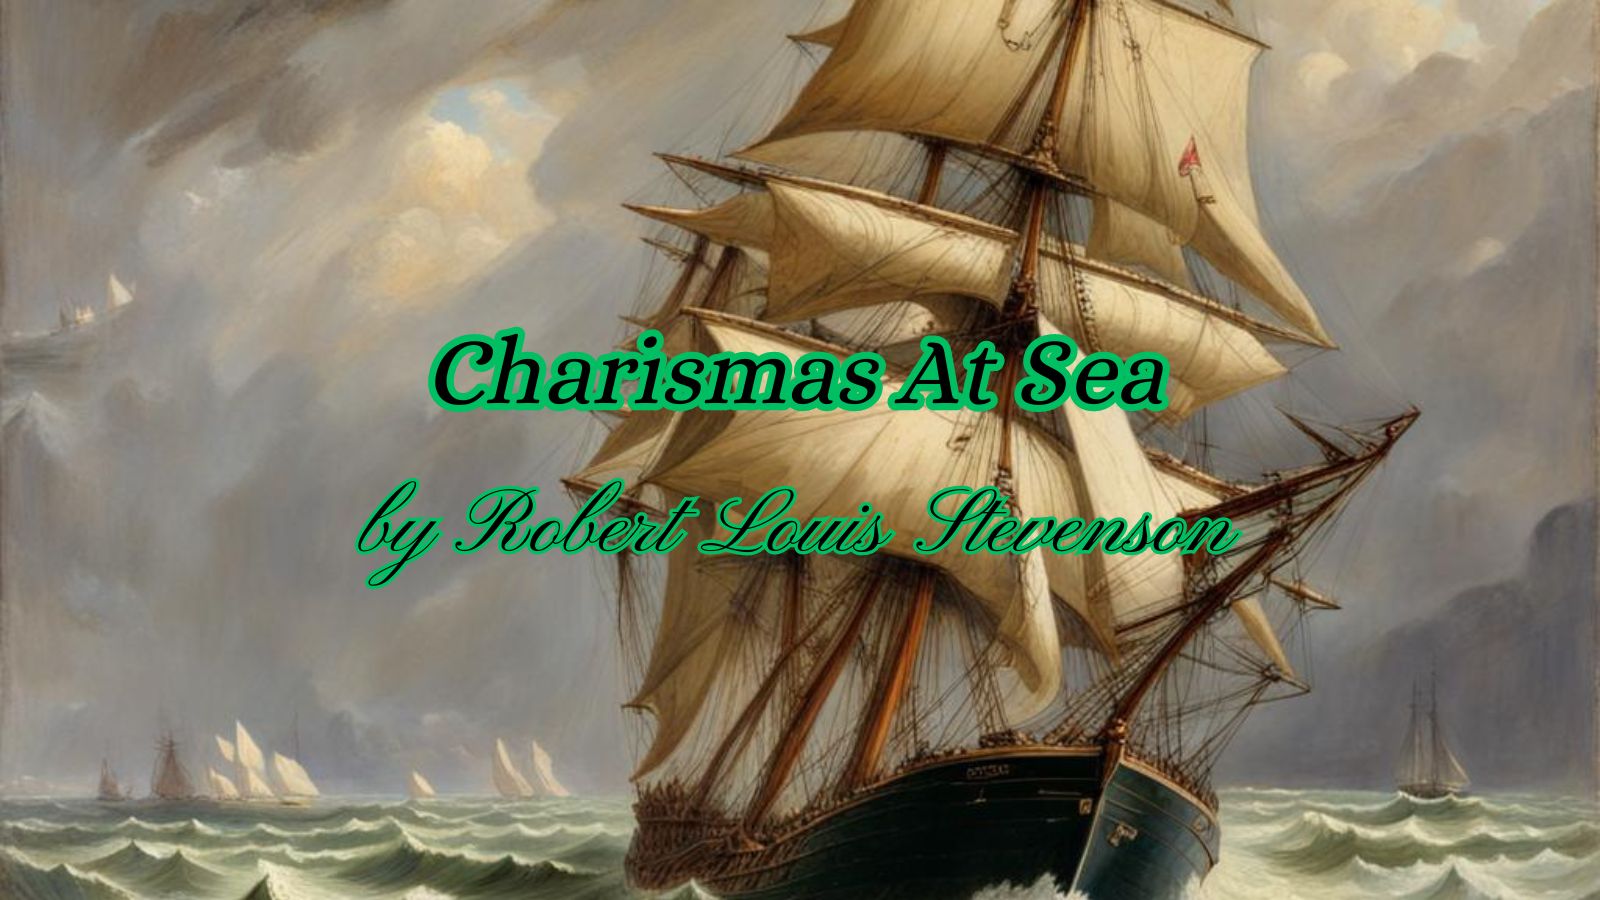 Christmas at Sea by Robert Louis Stevenson